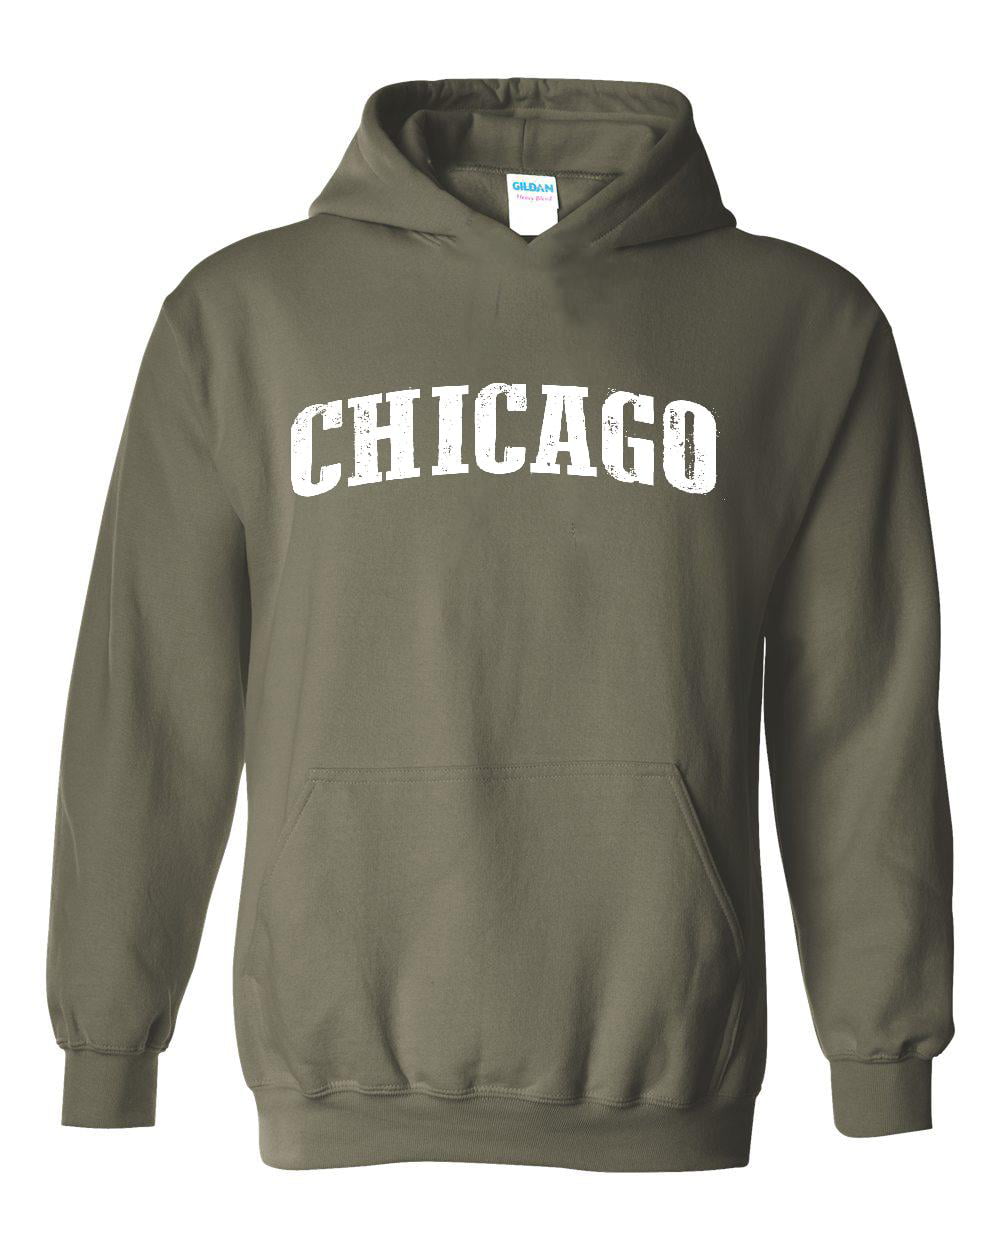 IWPF - Women Sweatshirts and Hoodies - Chicago